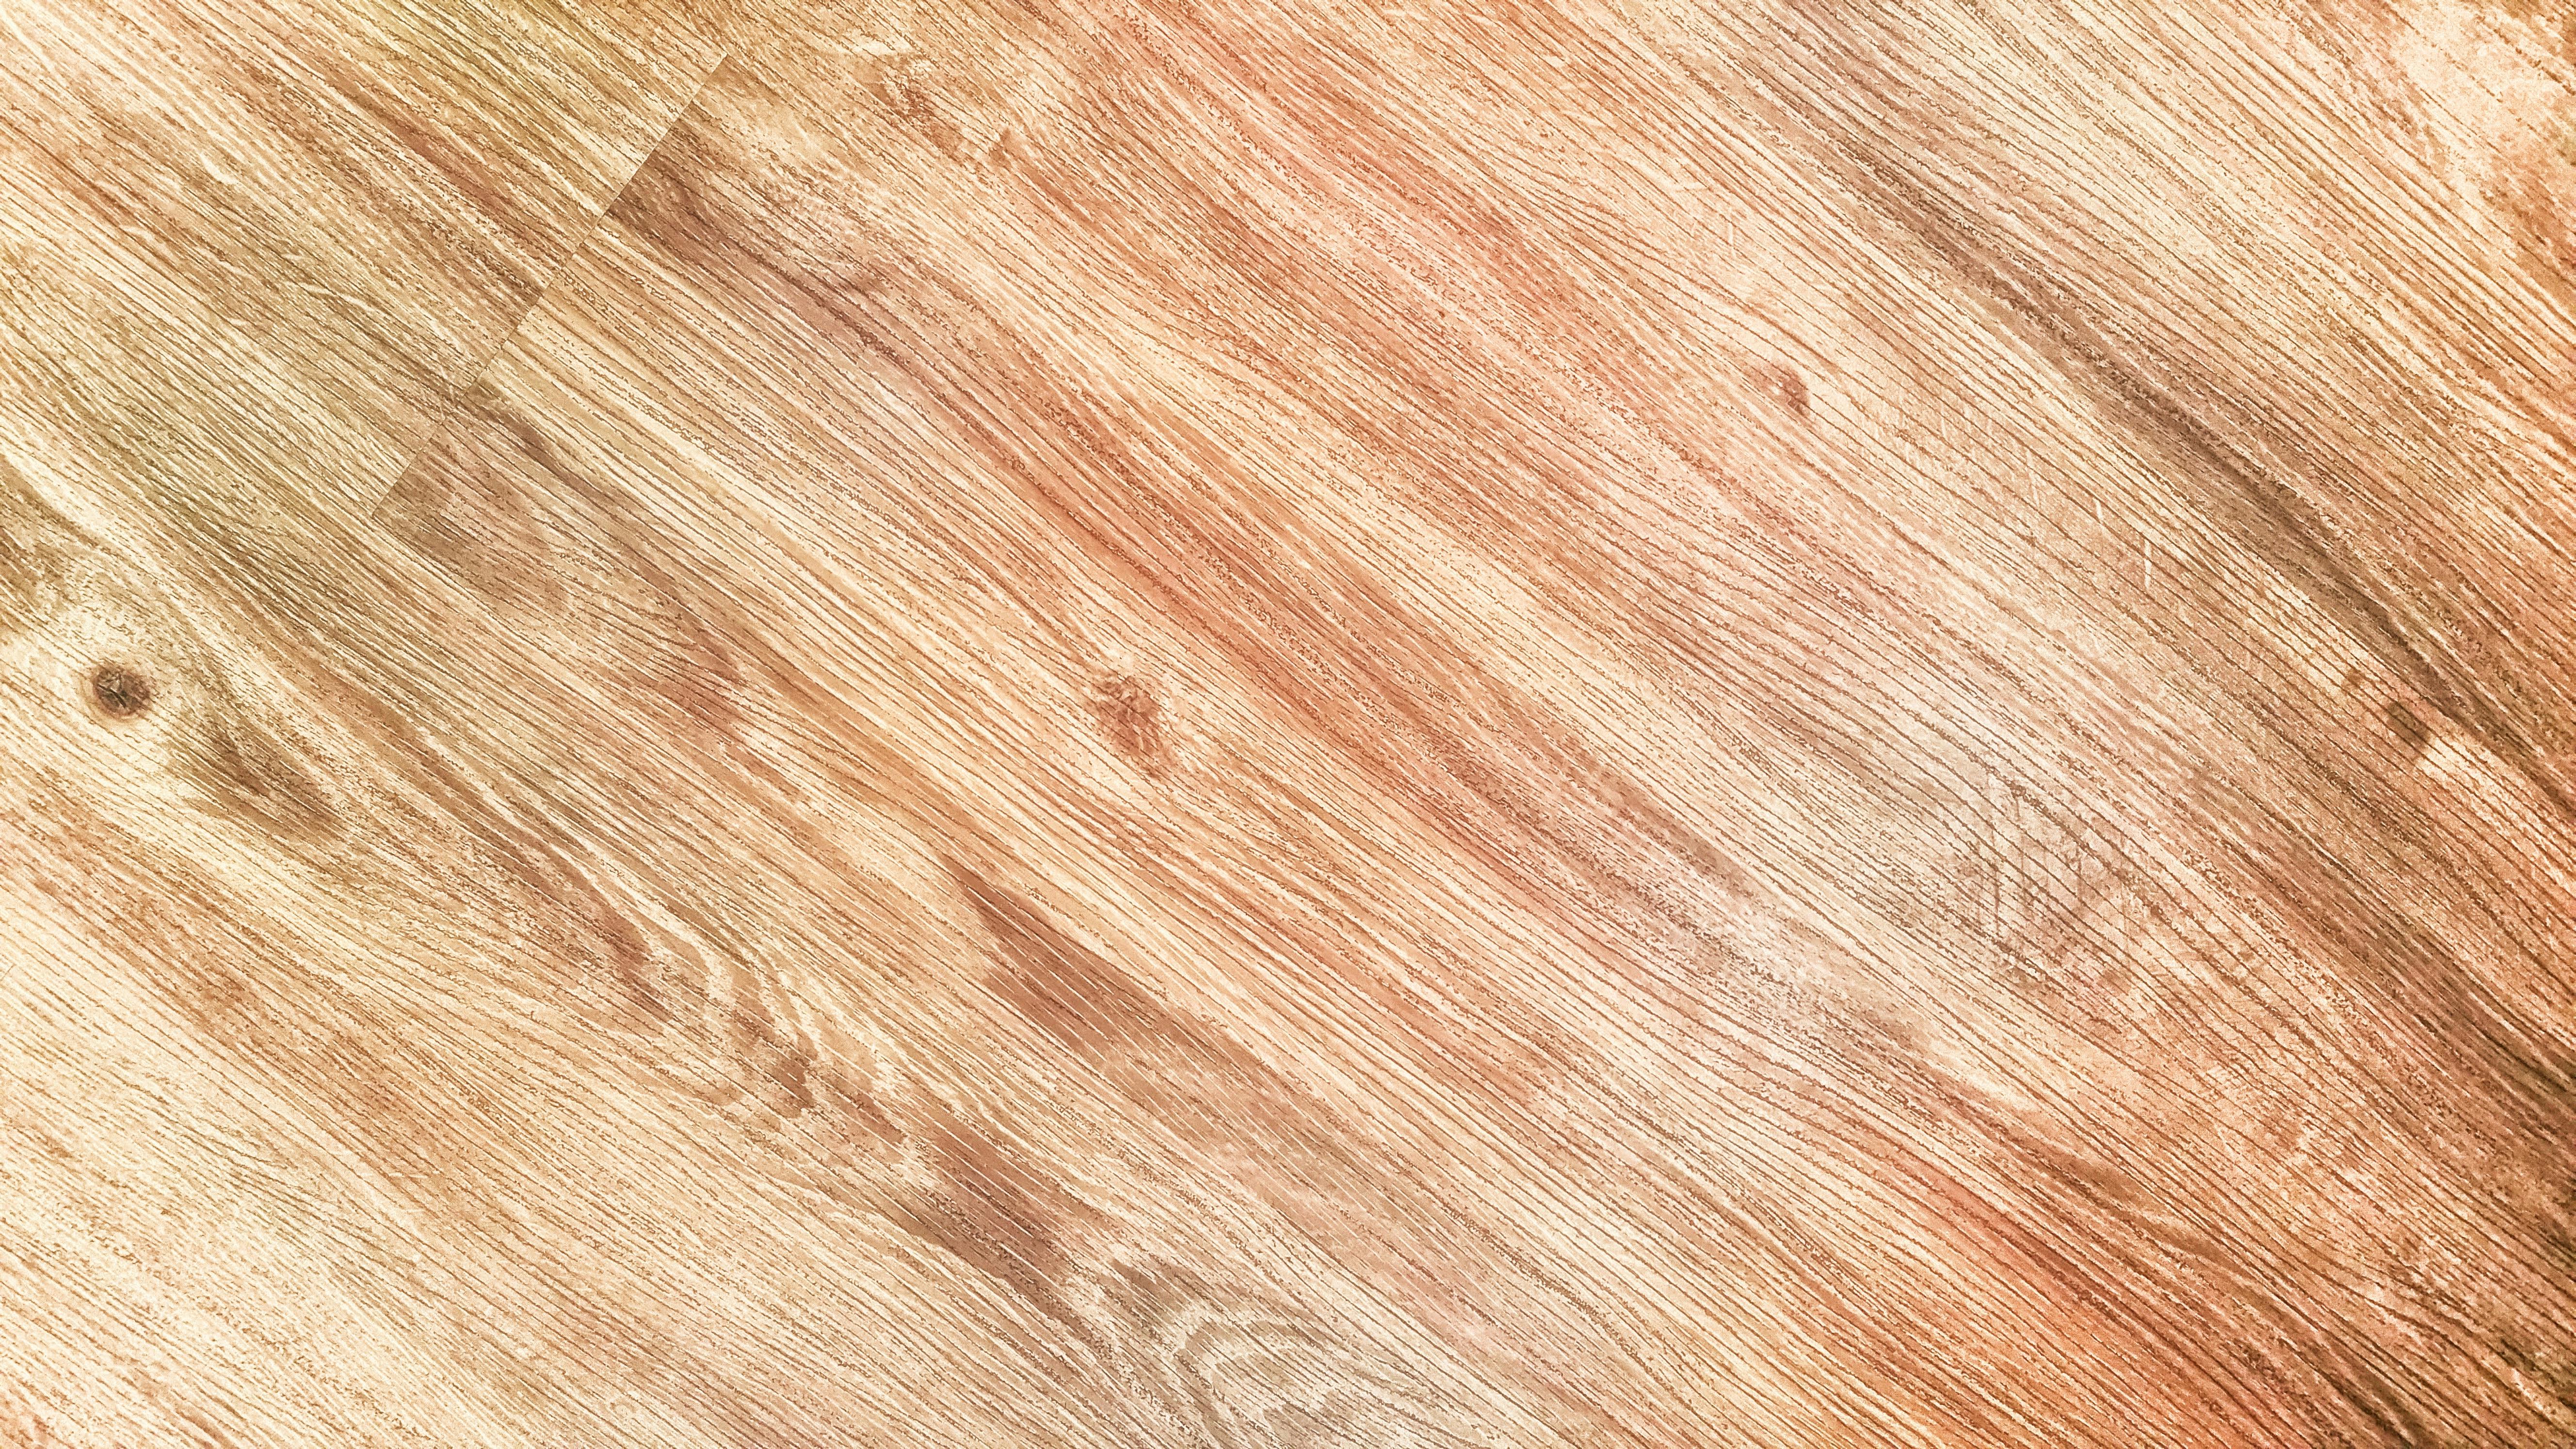 Wood Flooring HD wallpapers free download | Wallpaperbetter